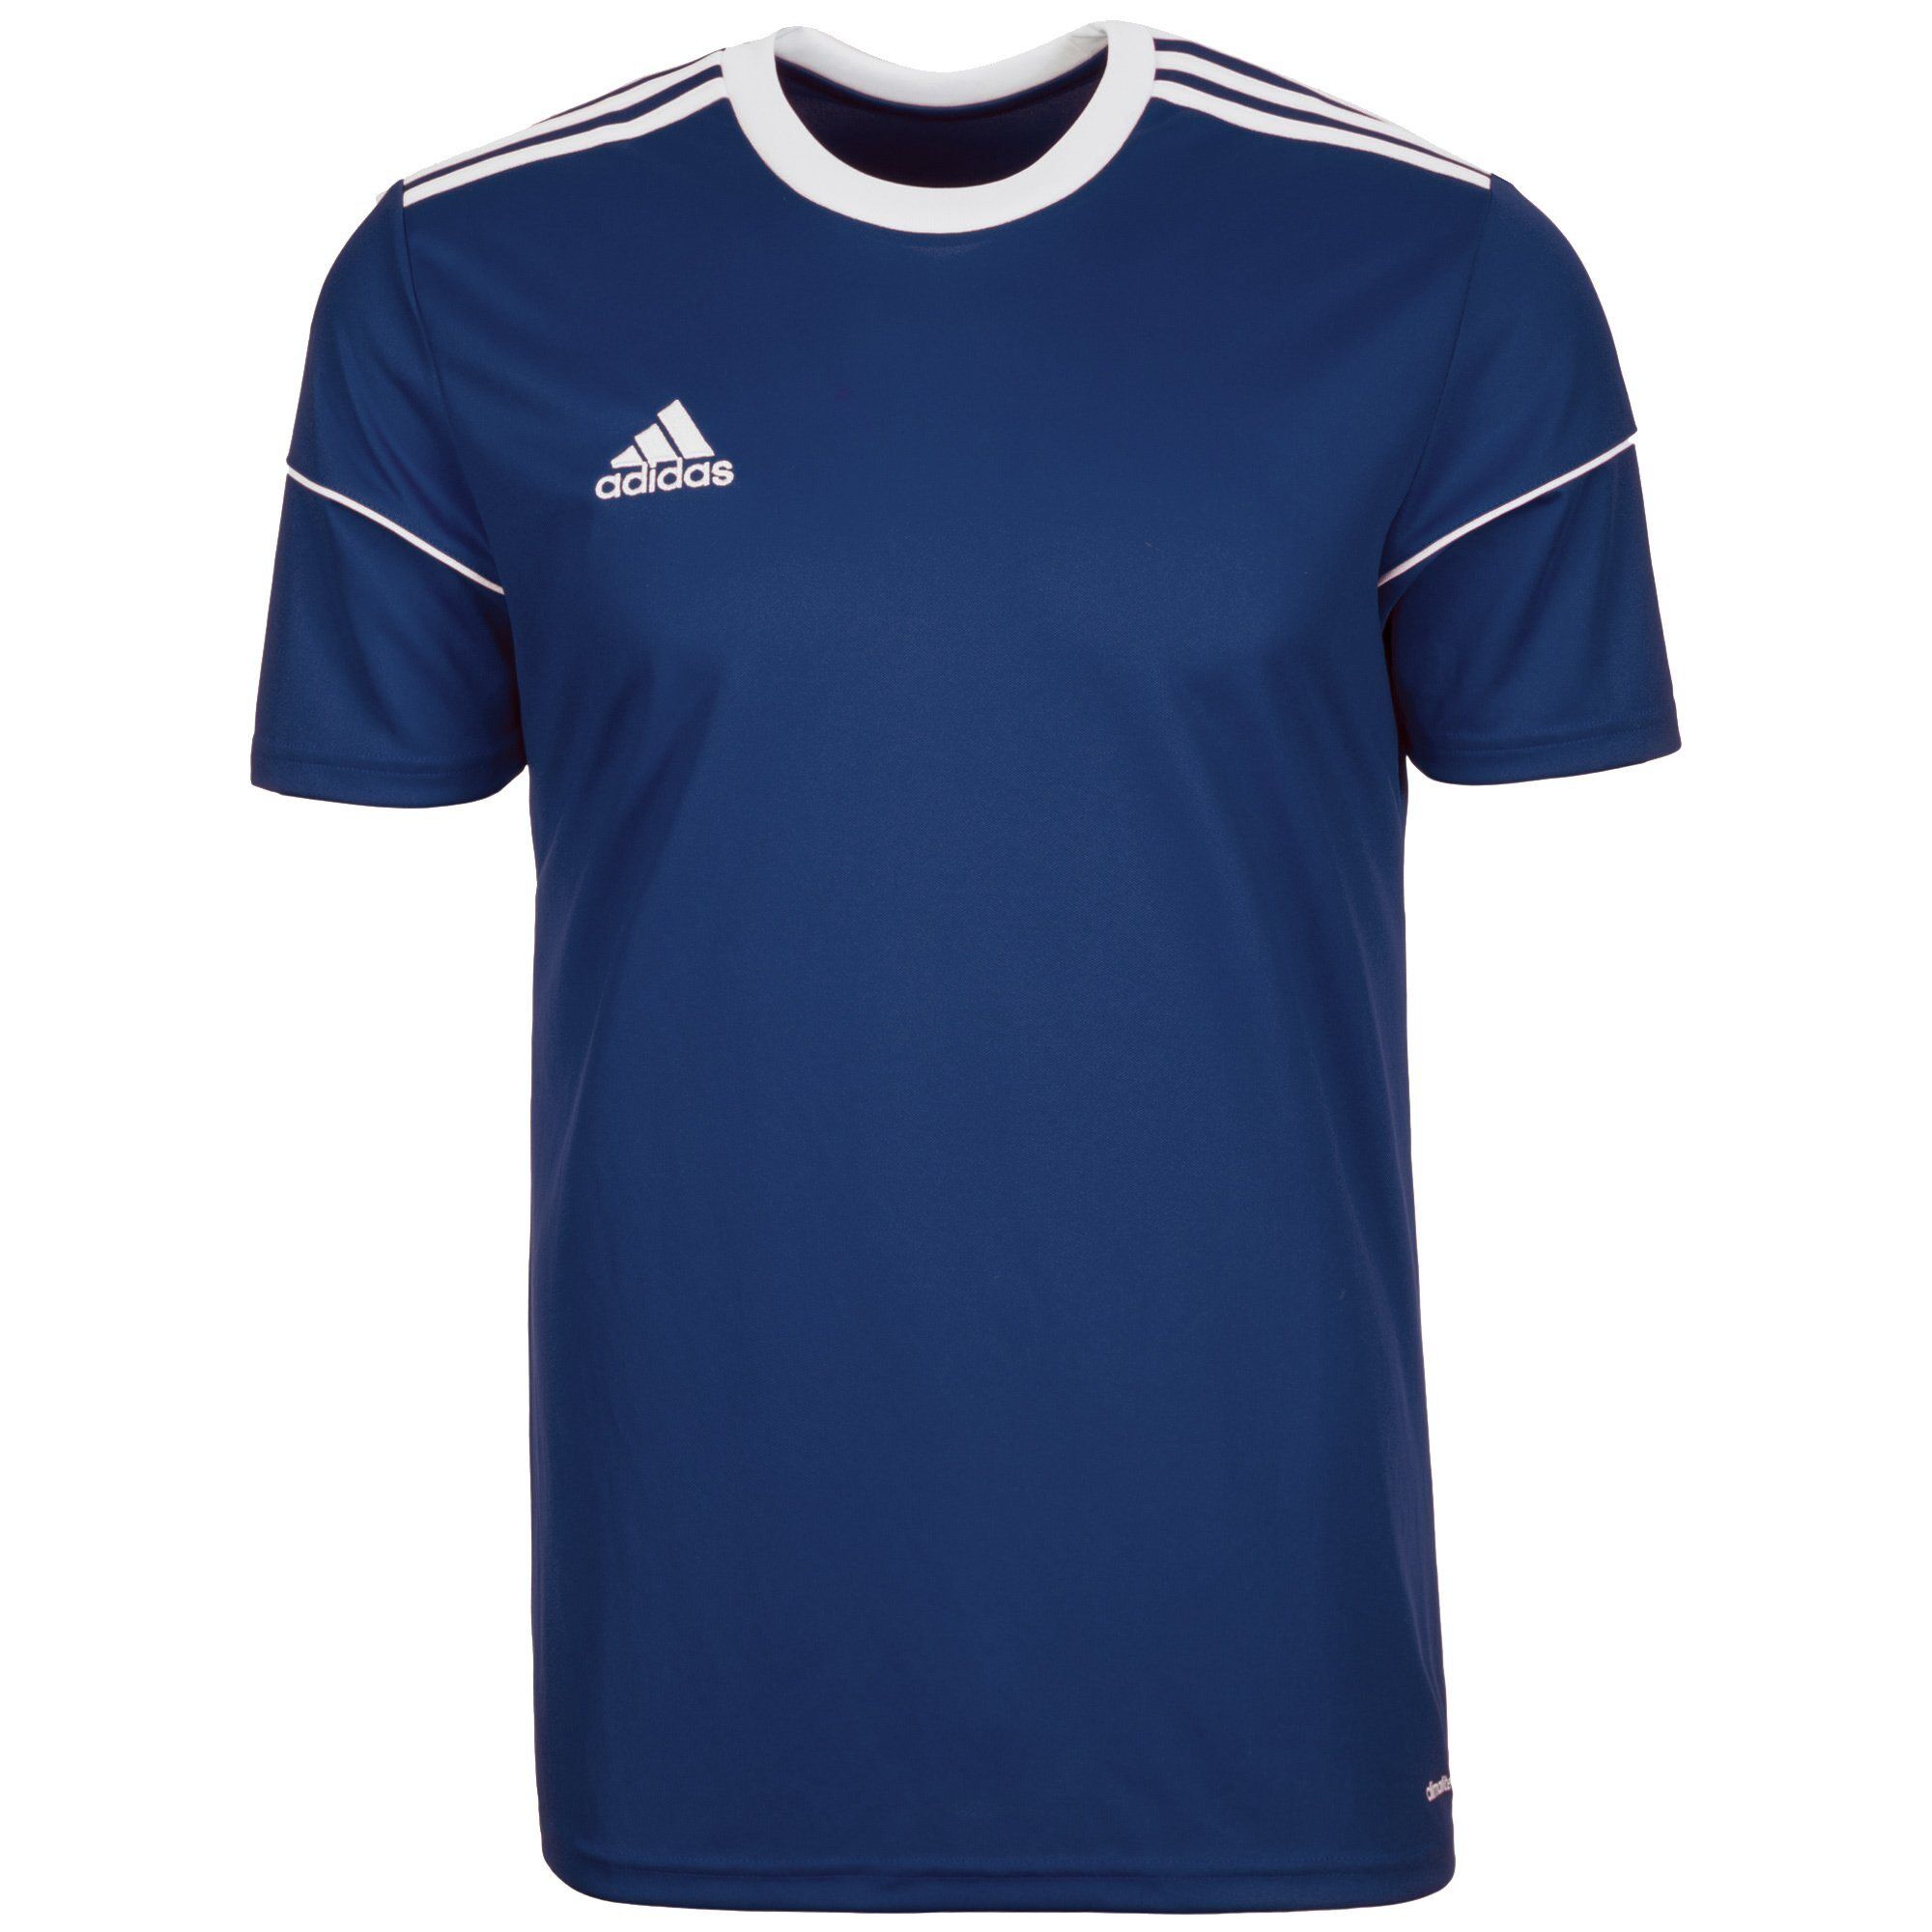 Adidas Performance Fußballtrikot »Squadra 17«, dunkelblau-weiß